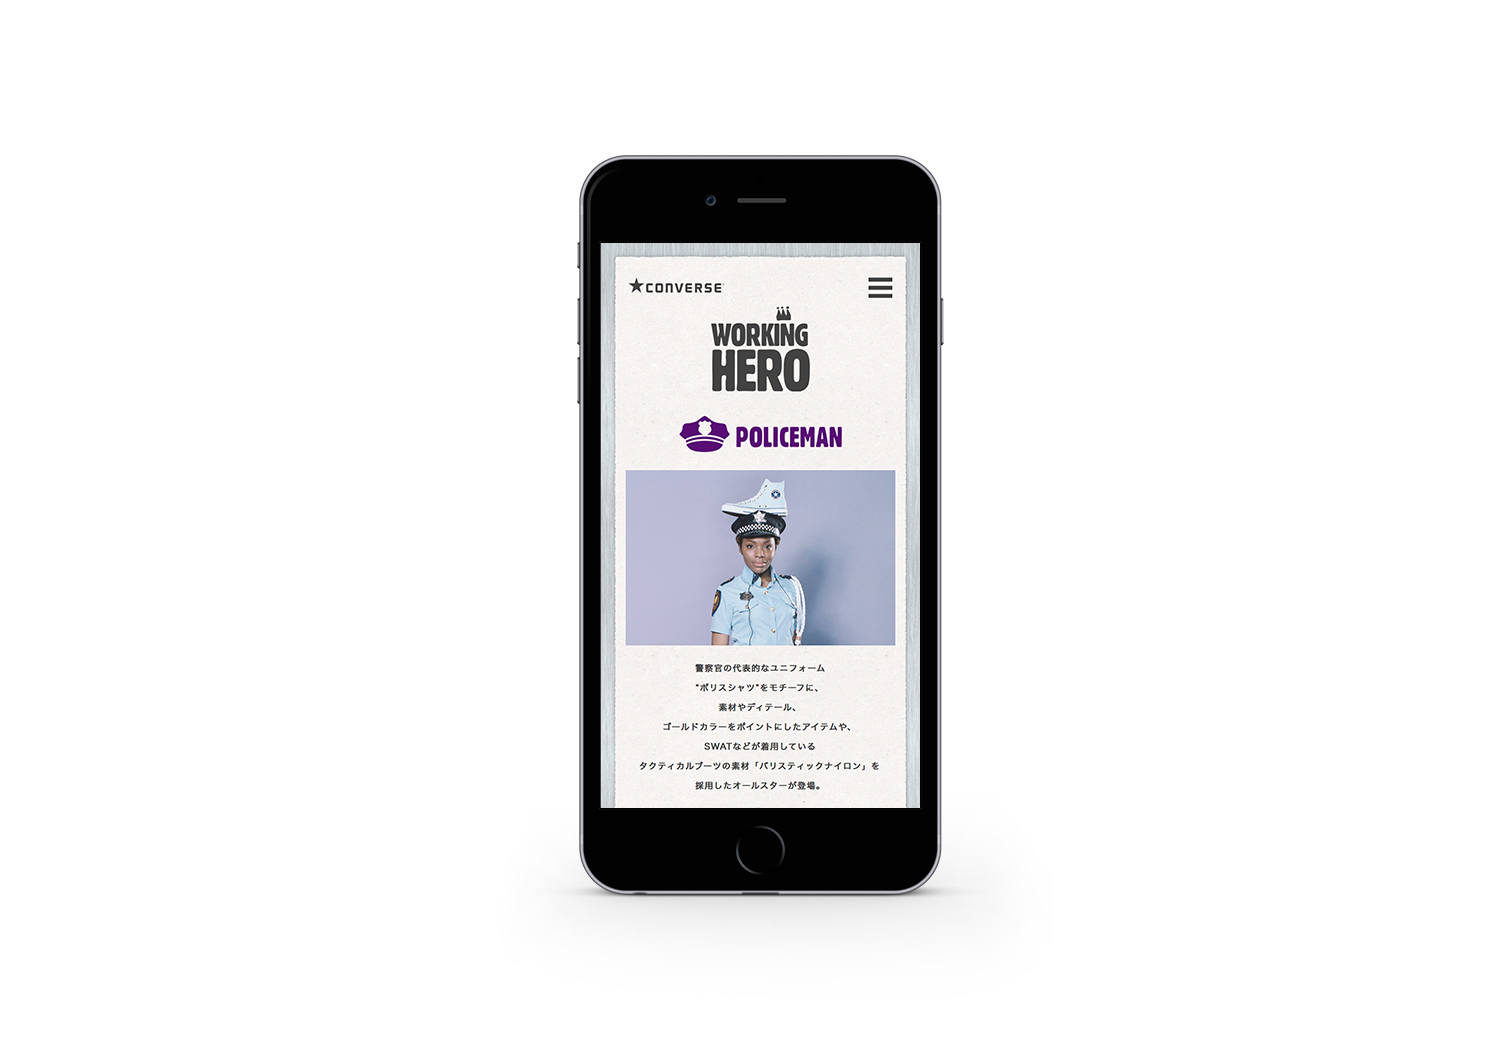 CONVERSE WORKING HERO Smartphone site 2016